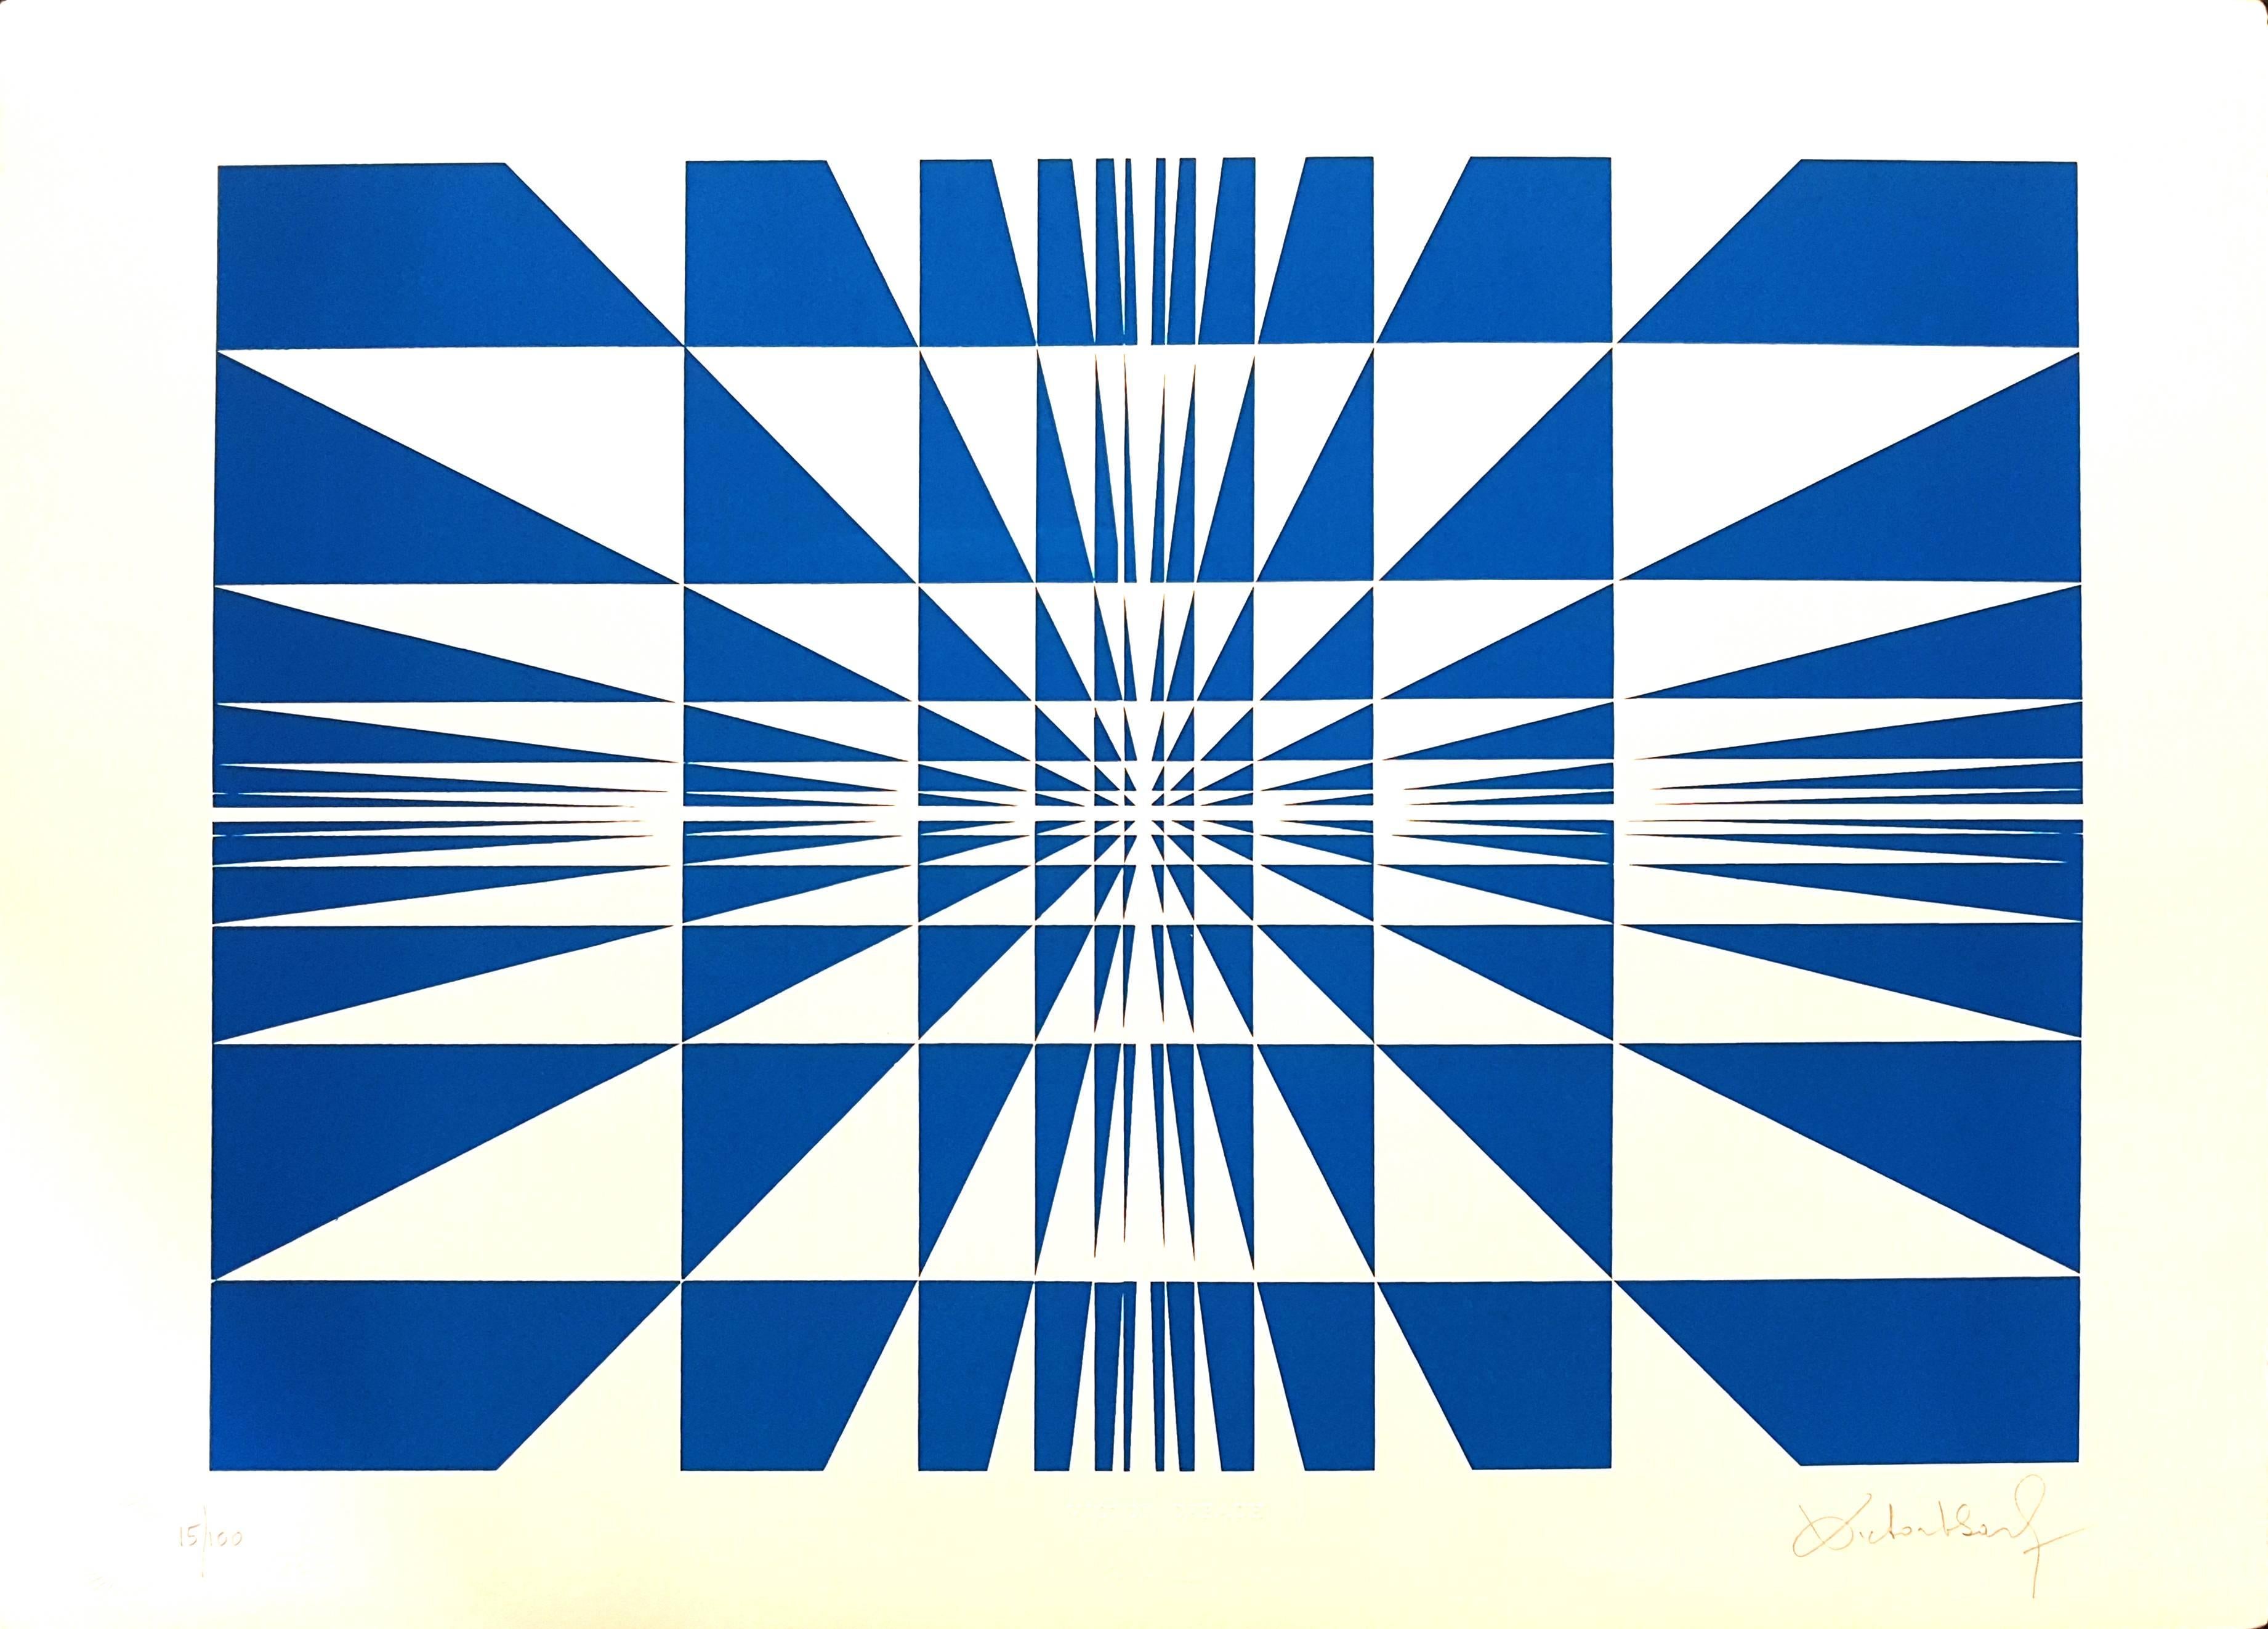 Victor Debach Abstract Print -  Blue Composition - Screen Print by V. Debach - 1970s